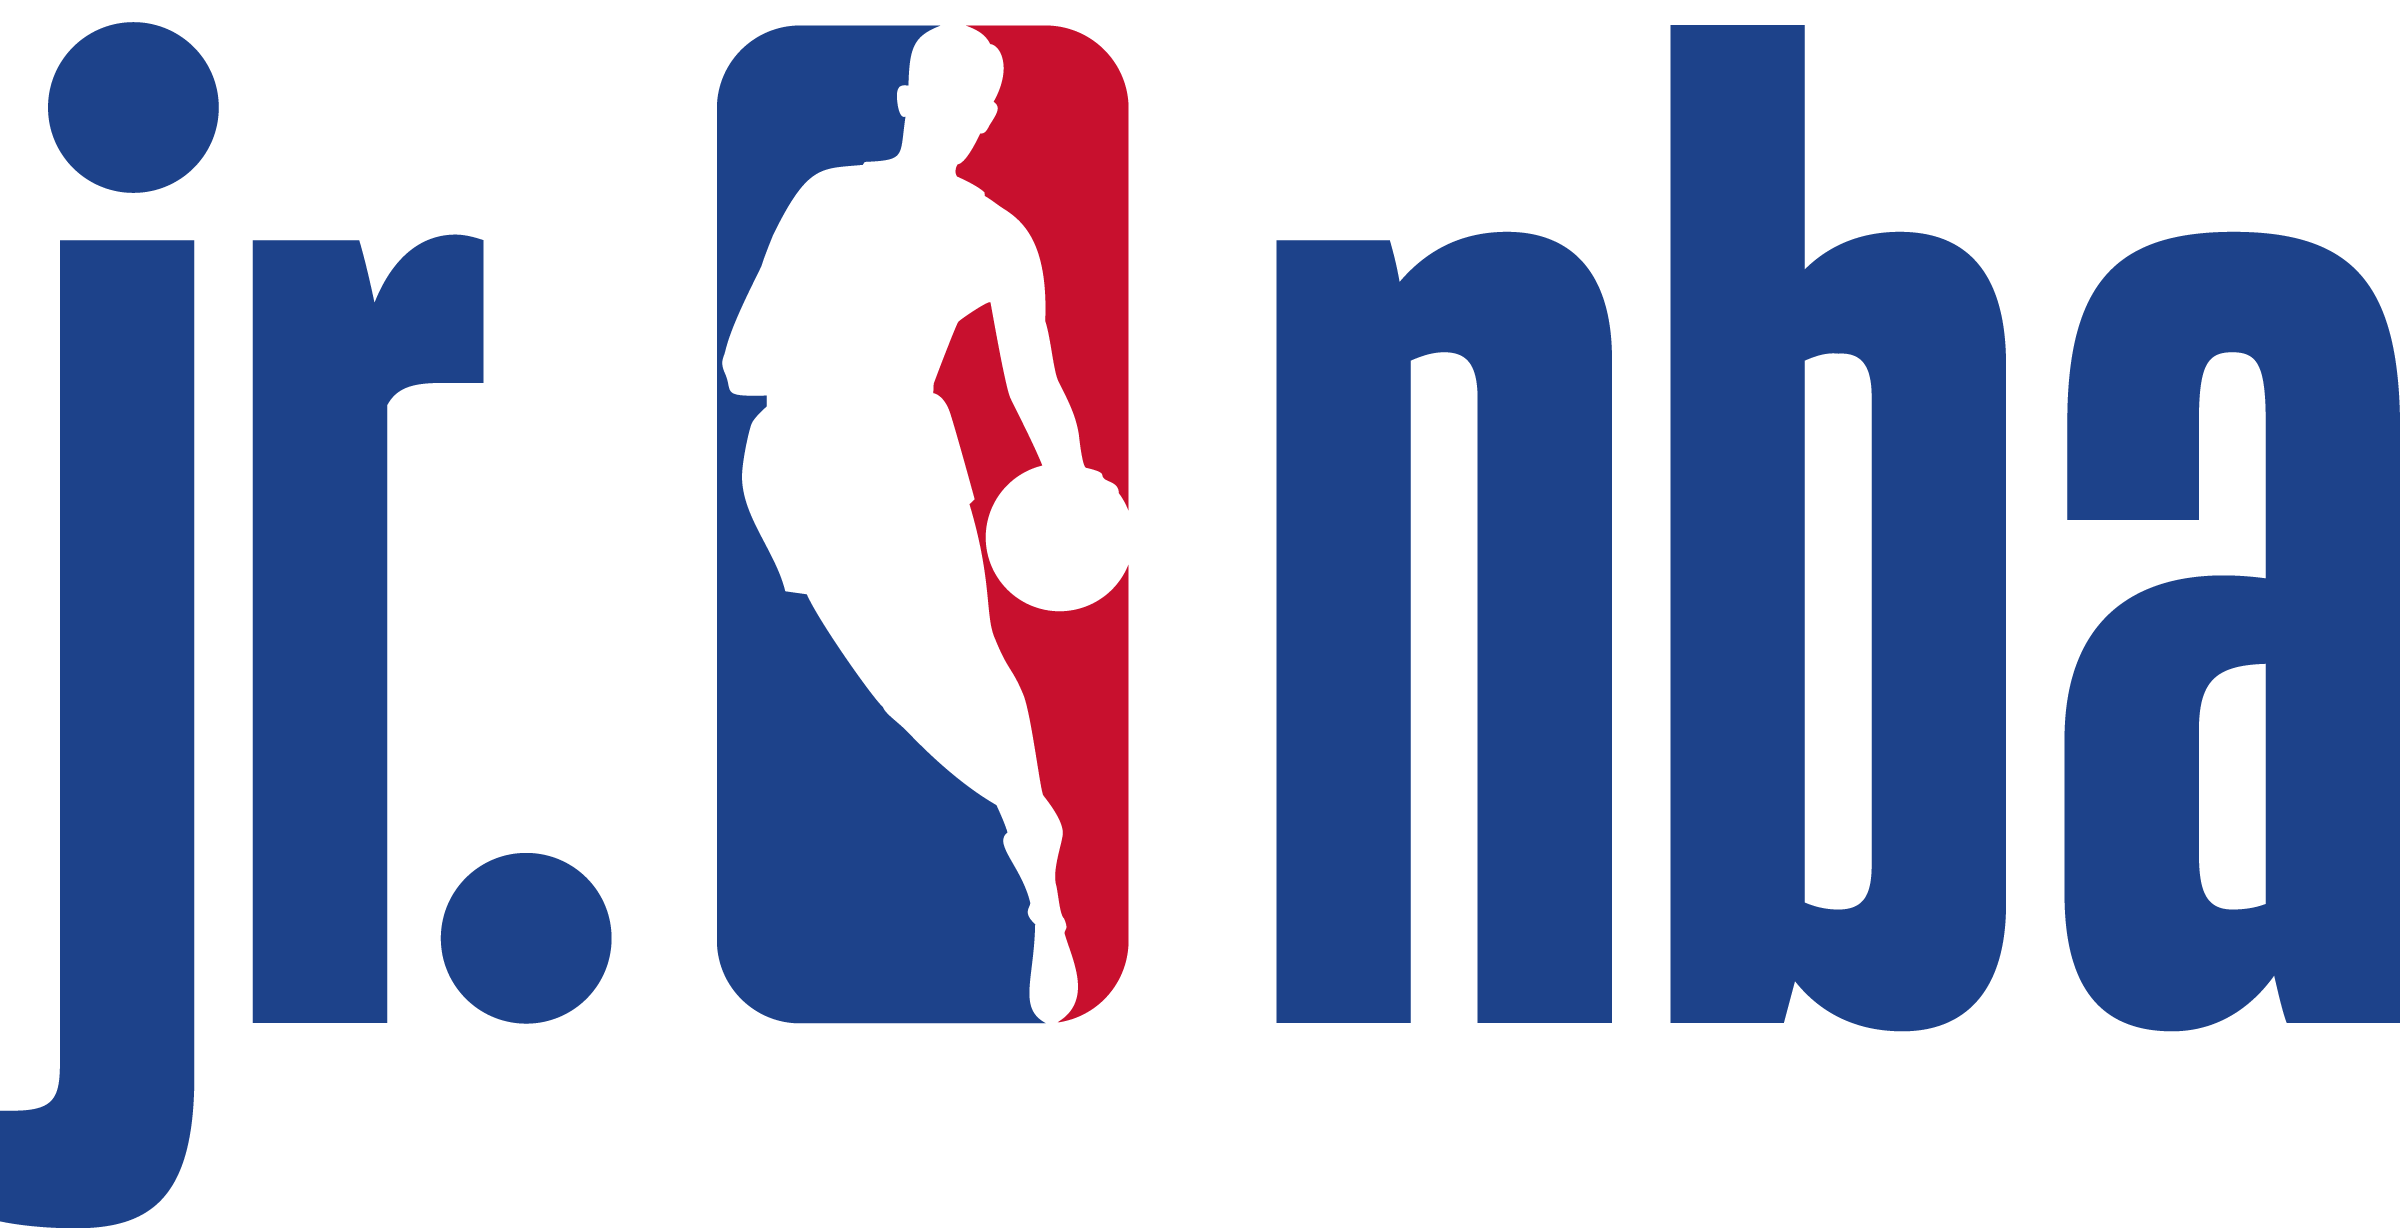 NBA логотип прозрачный образ